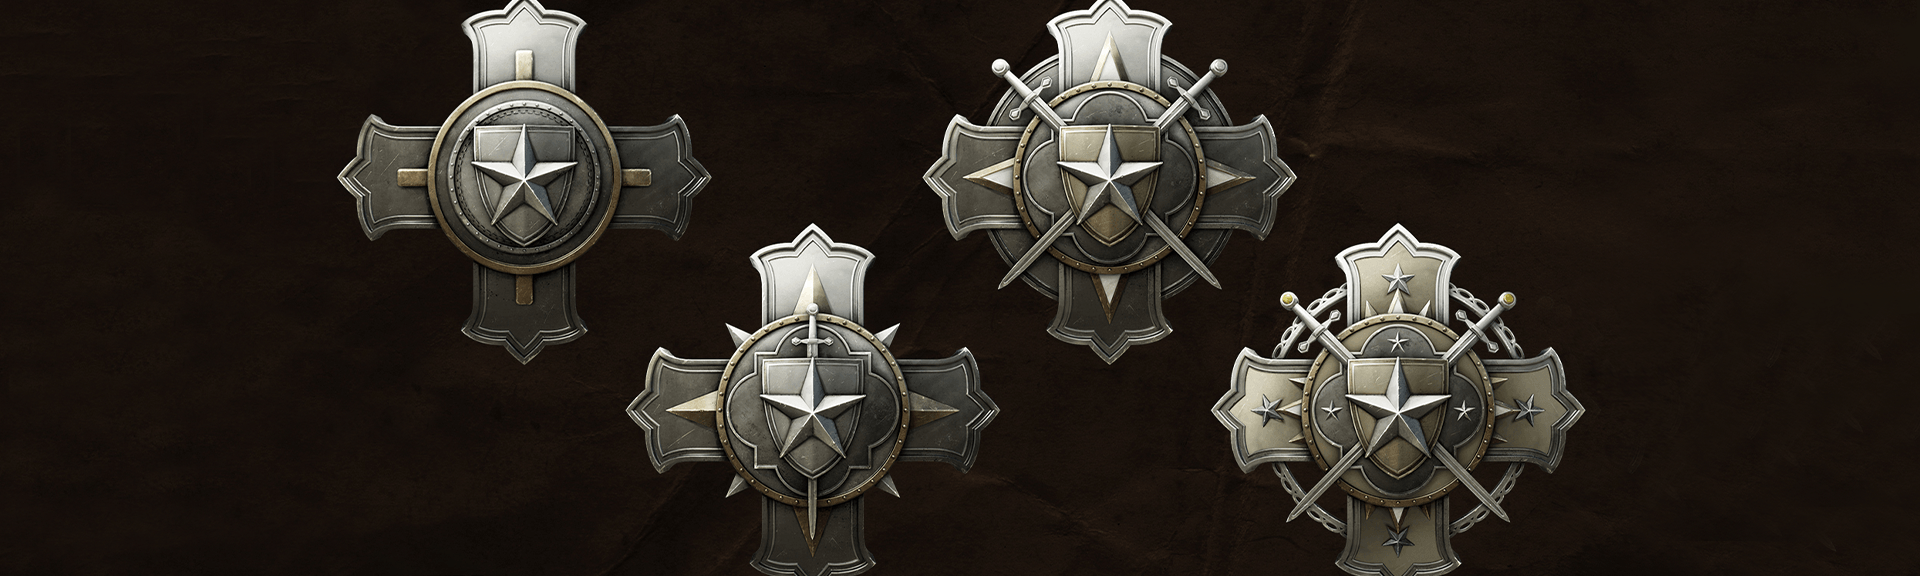 prestige emblems